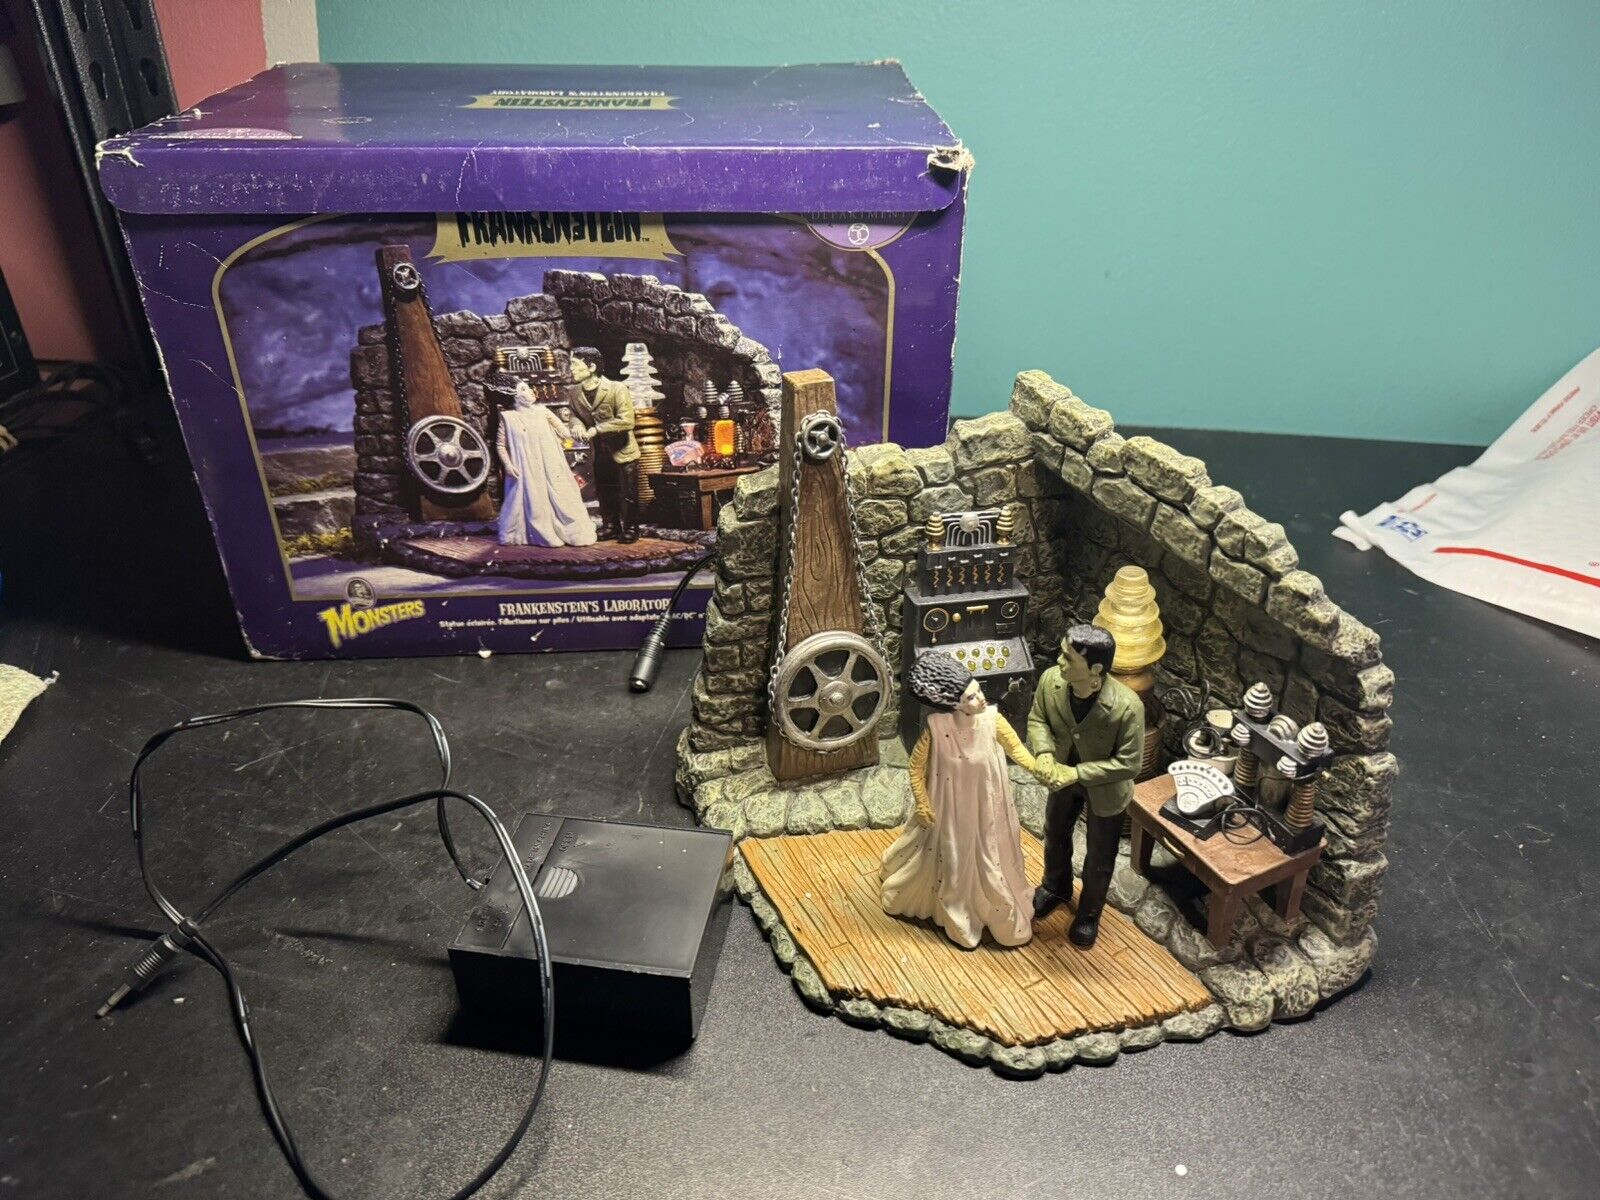 Department 56 Universal Monsters Frankenstein's Laboratory Light Up Figure